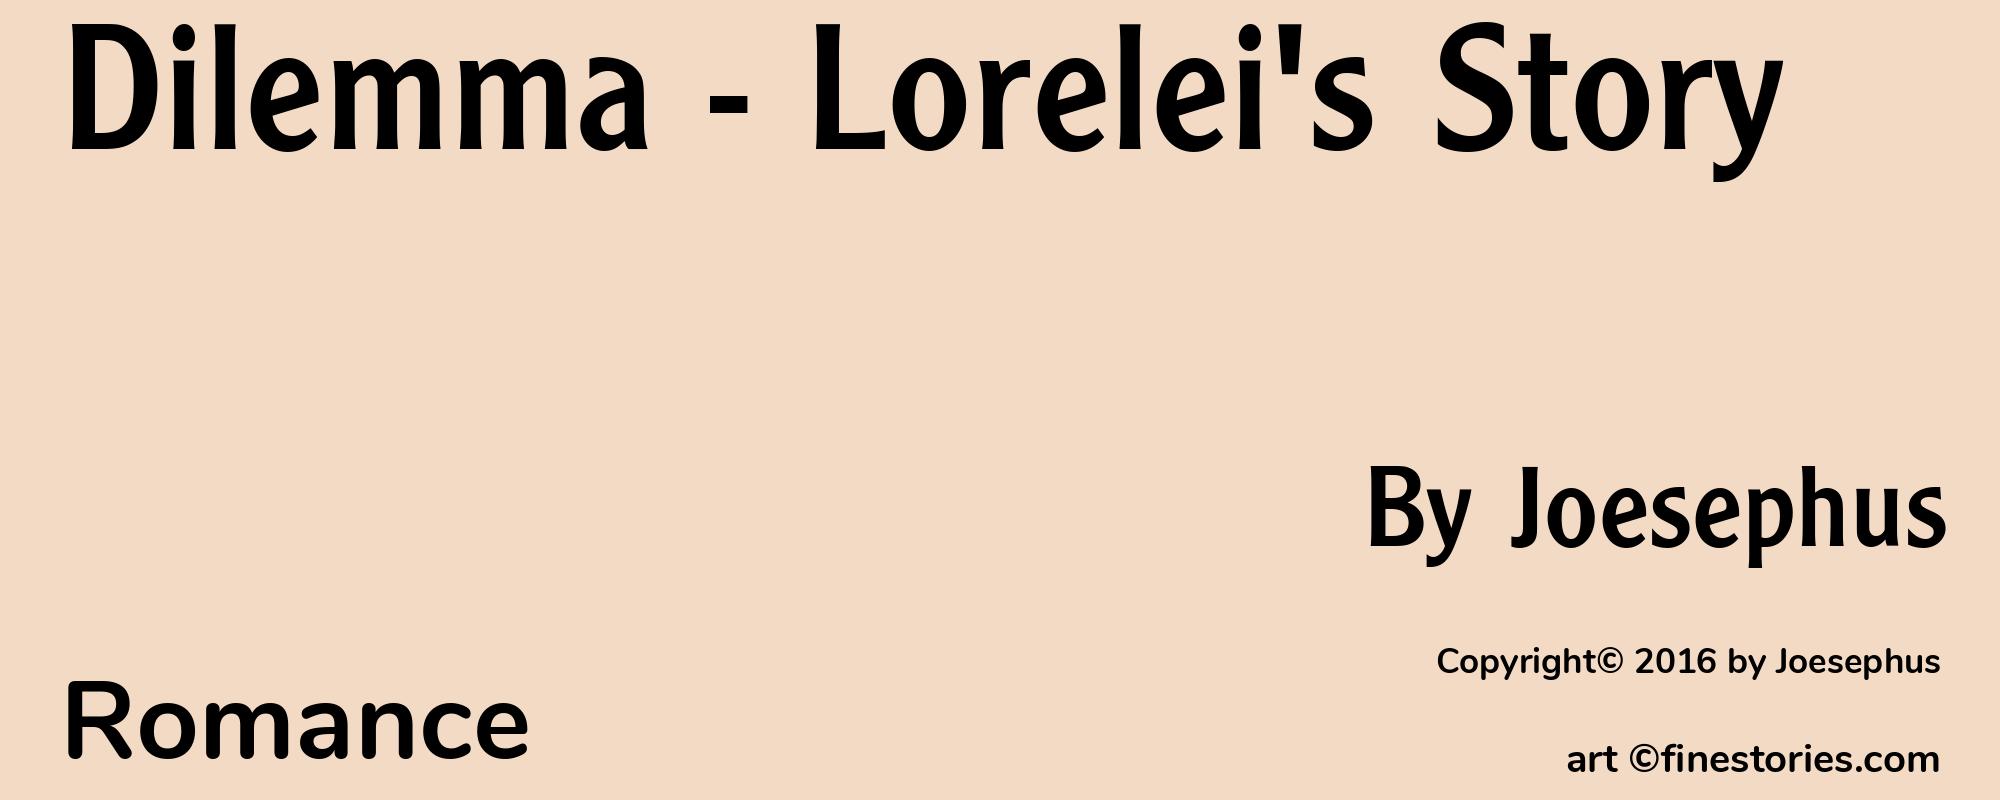 Dilemma - Lorelei's Story - Cover